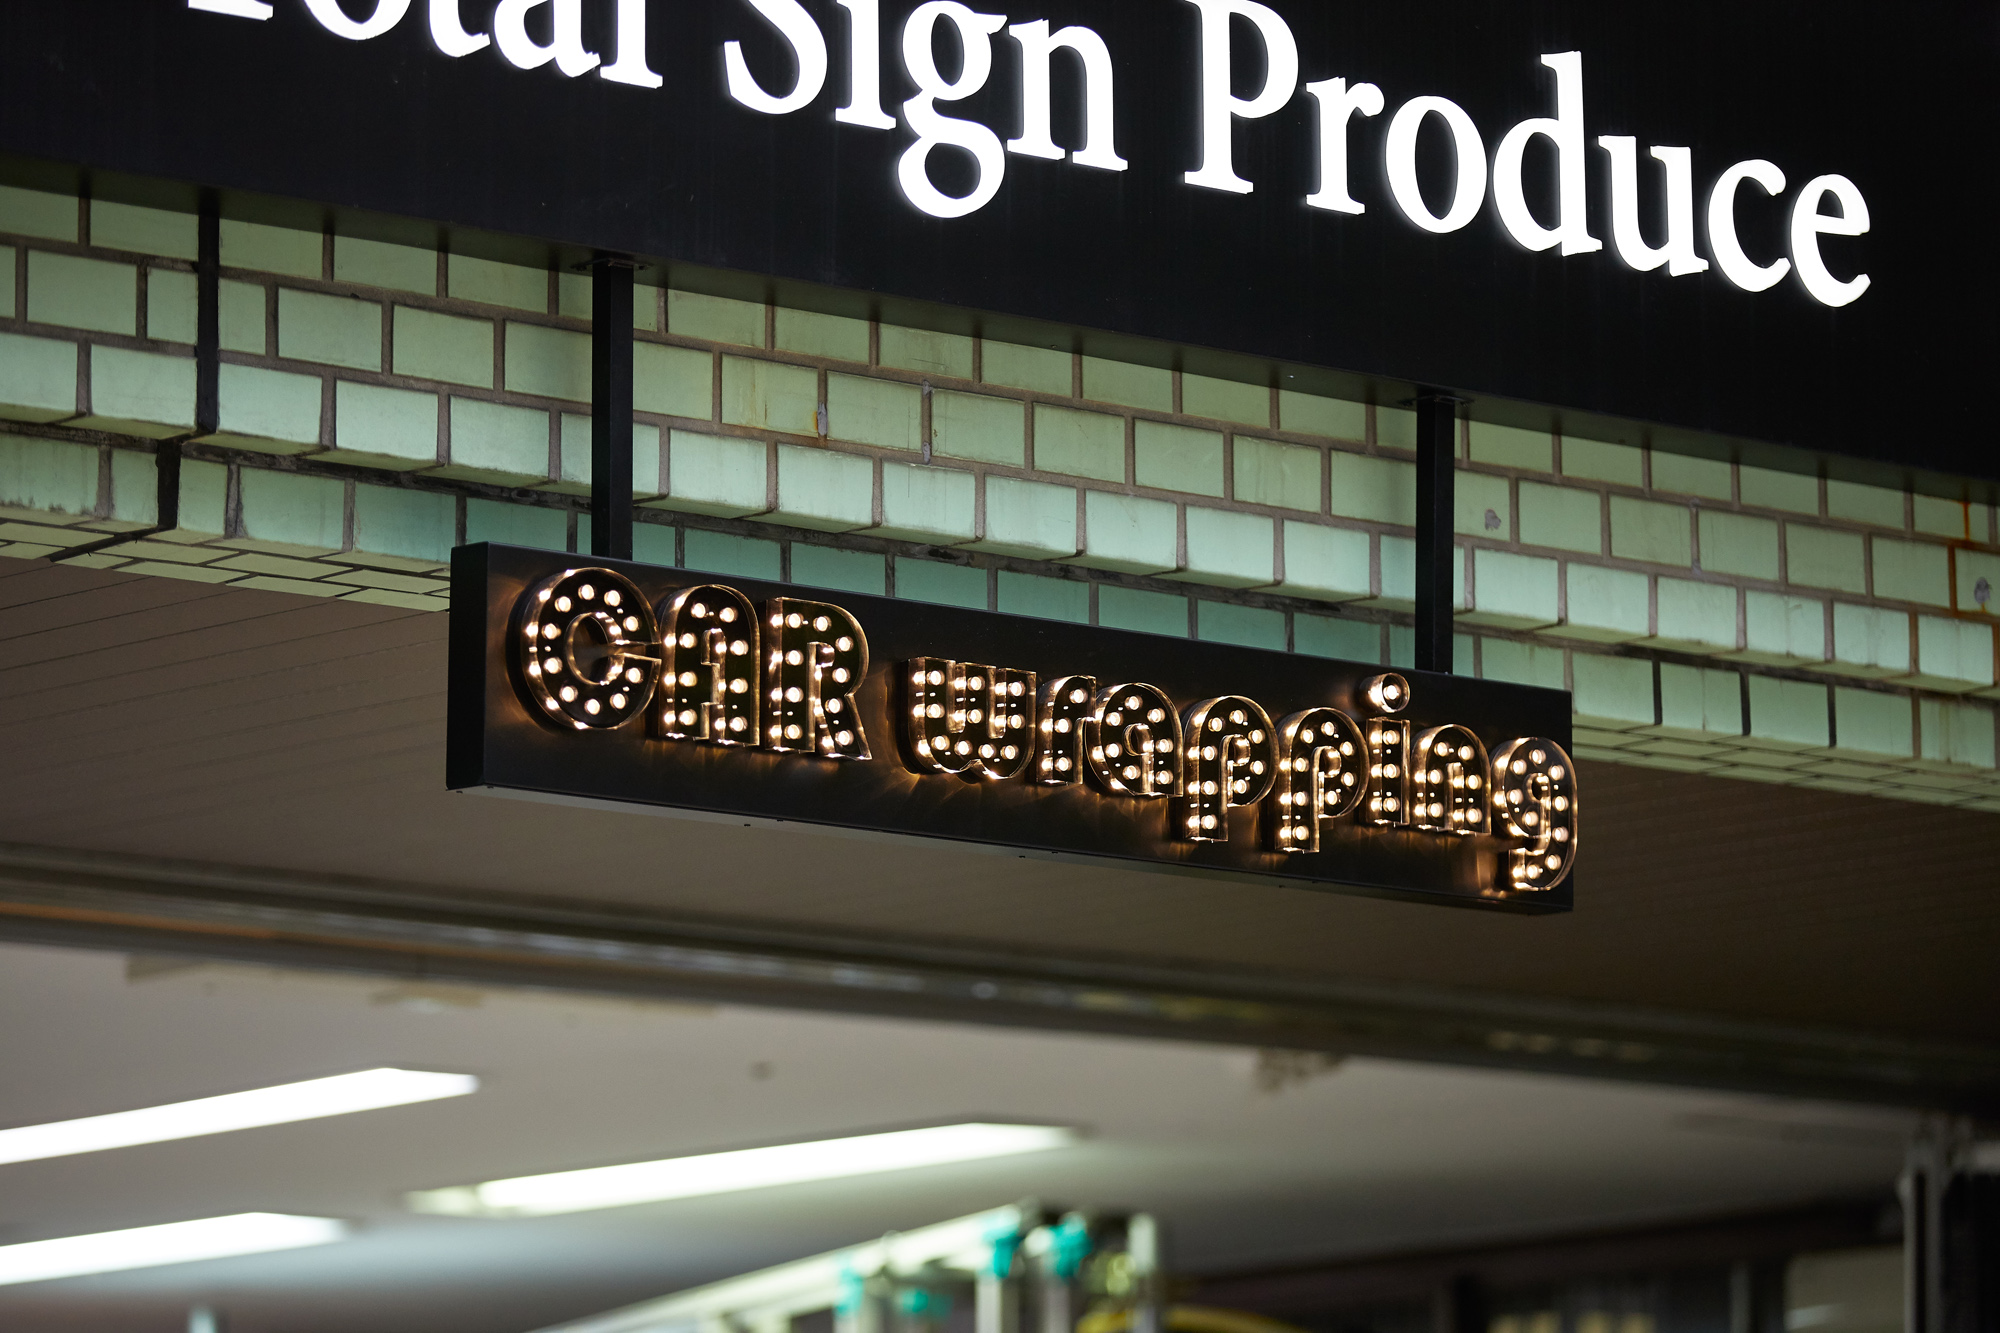 LEDサイン、LED看板のLEDIUS SIGN PRO DIAの施工事例、T-art 外壁サイン